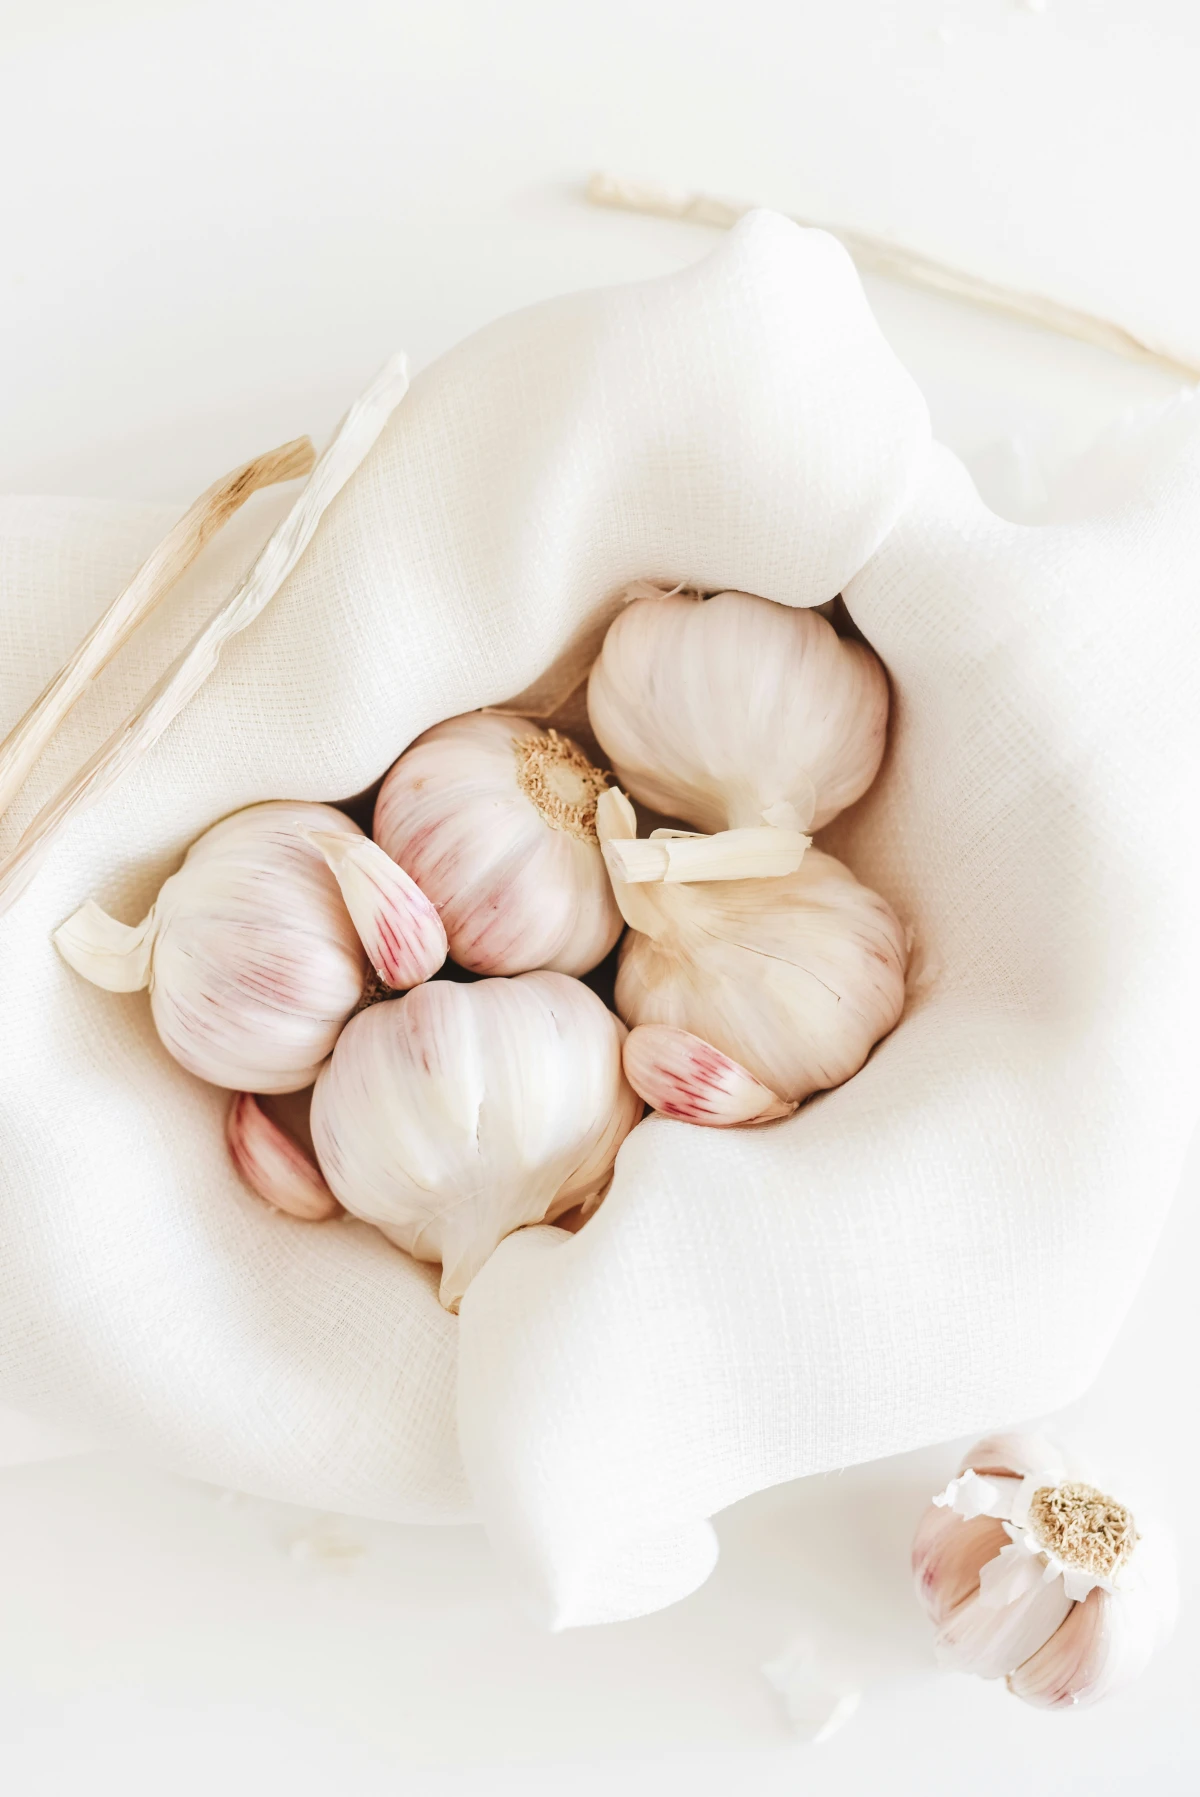 winter crops garlic in a bowl